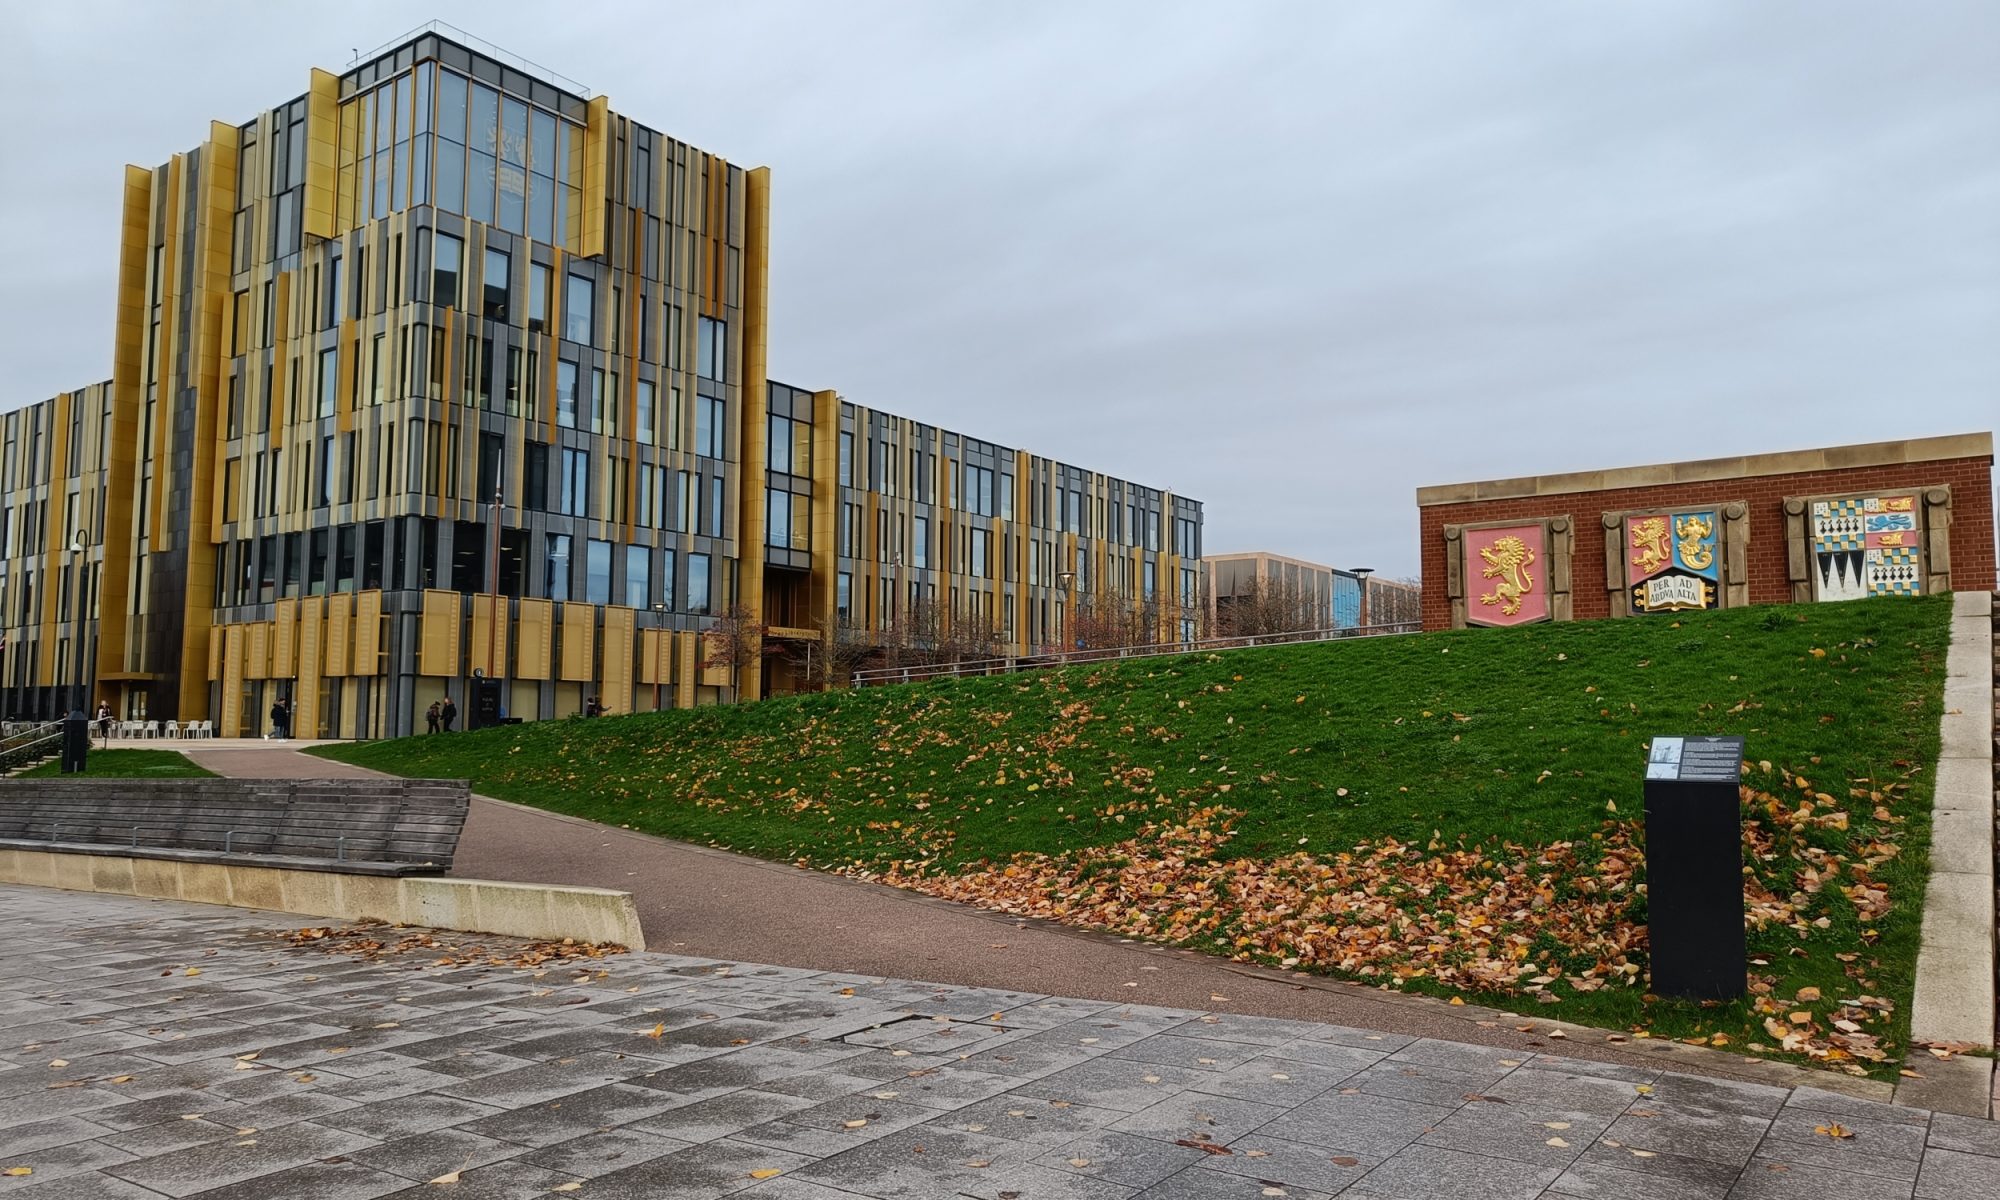 University of Birmingham, Edgbaston campus (Main Library)